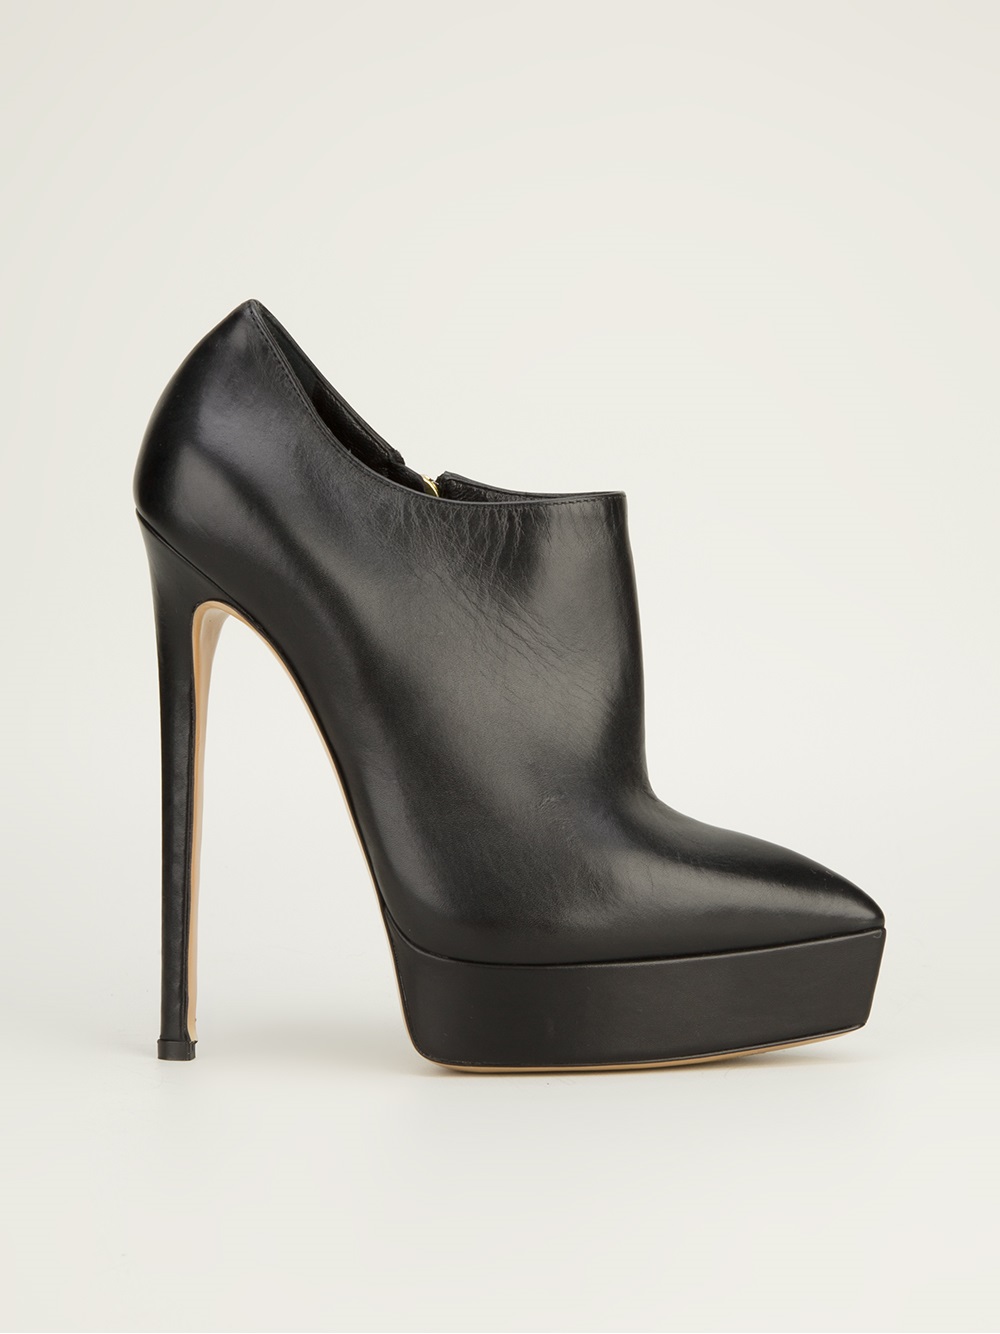 Casadei Stiletto Ankle Boot in Black - Lyst